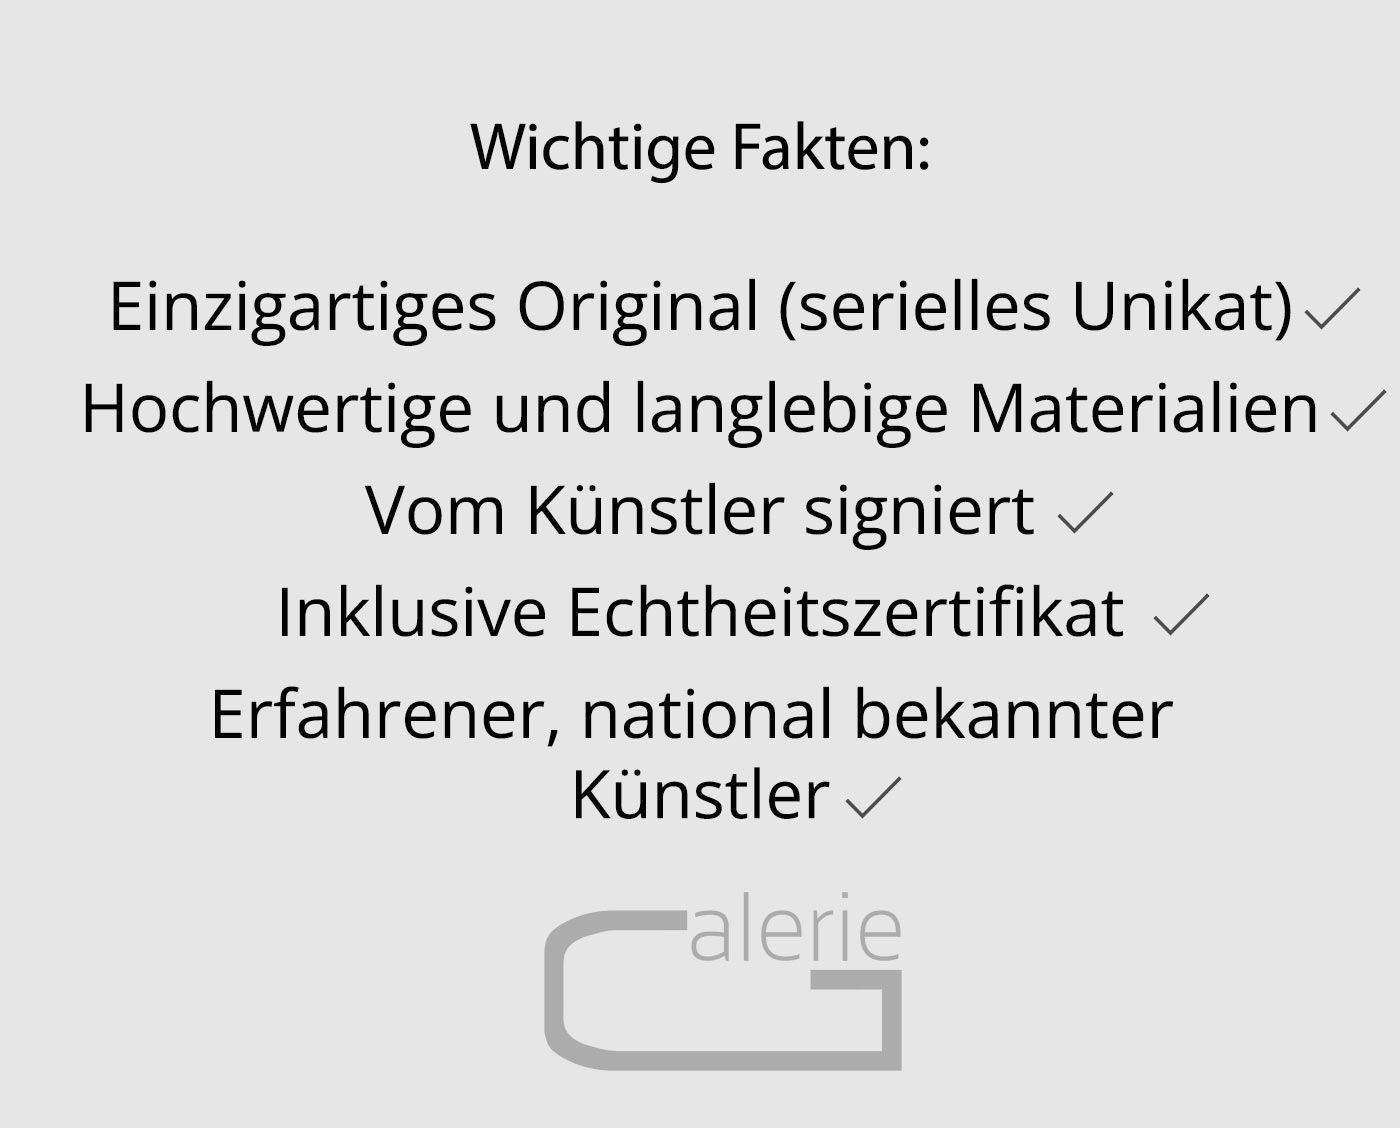 F.O. Haake: "Vier Schwäne - Blatt 17", originale Grafik/serielles Unikat, mehrfarbiger Linoldruck